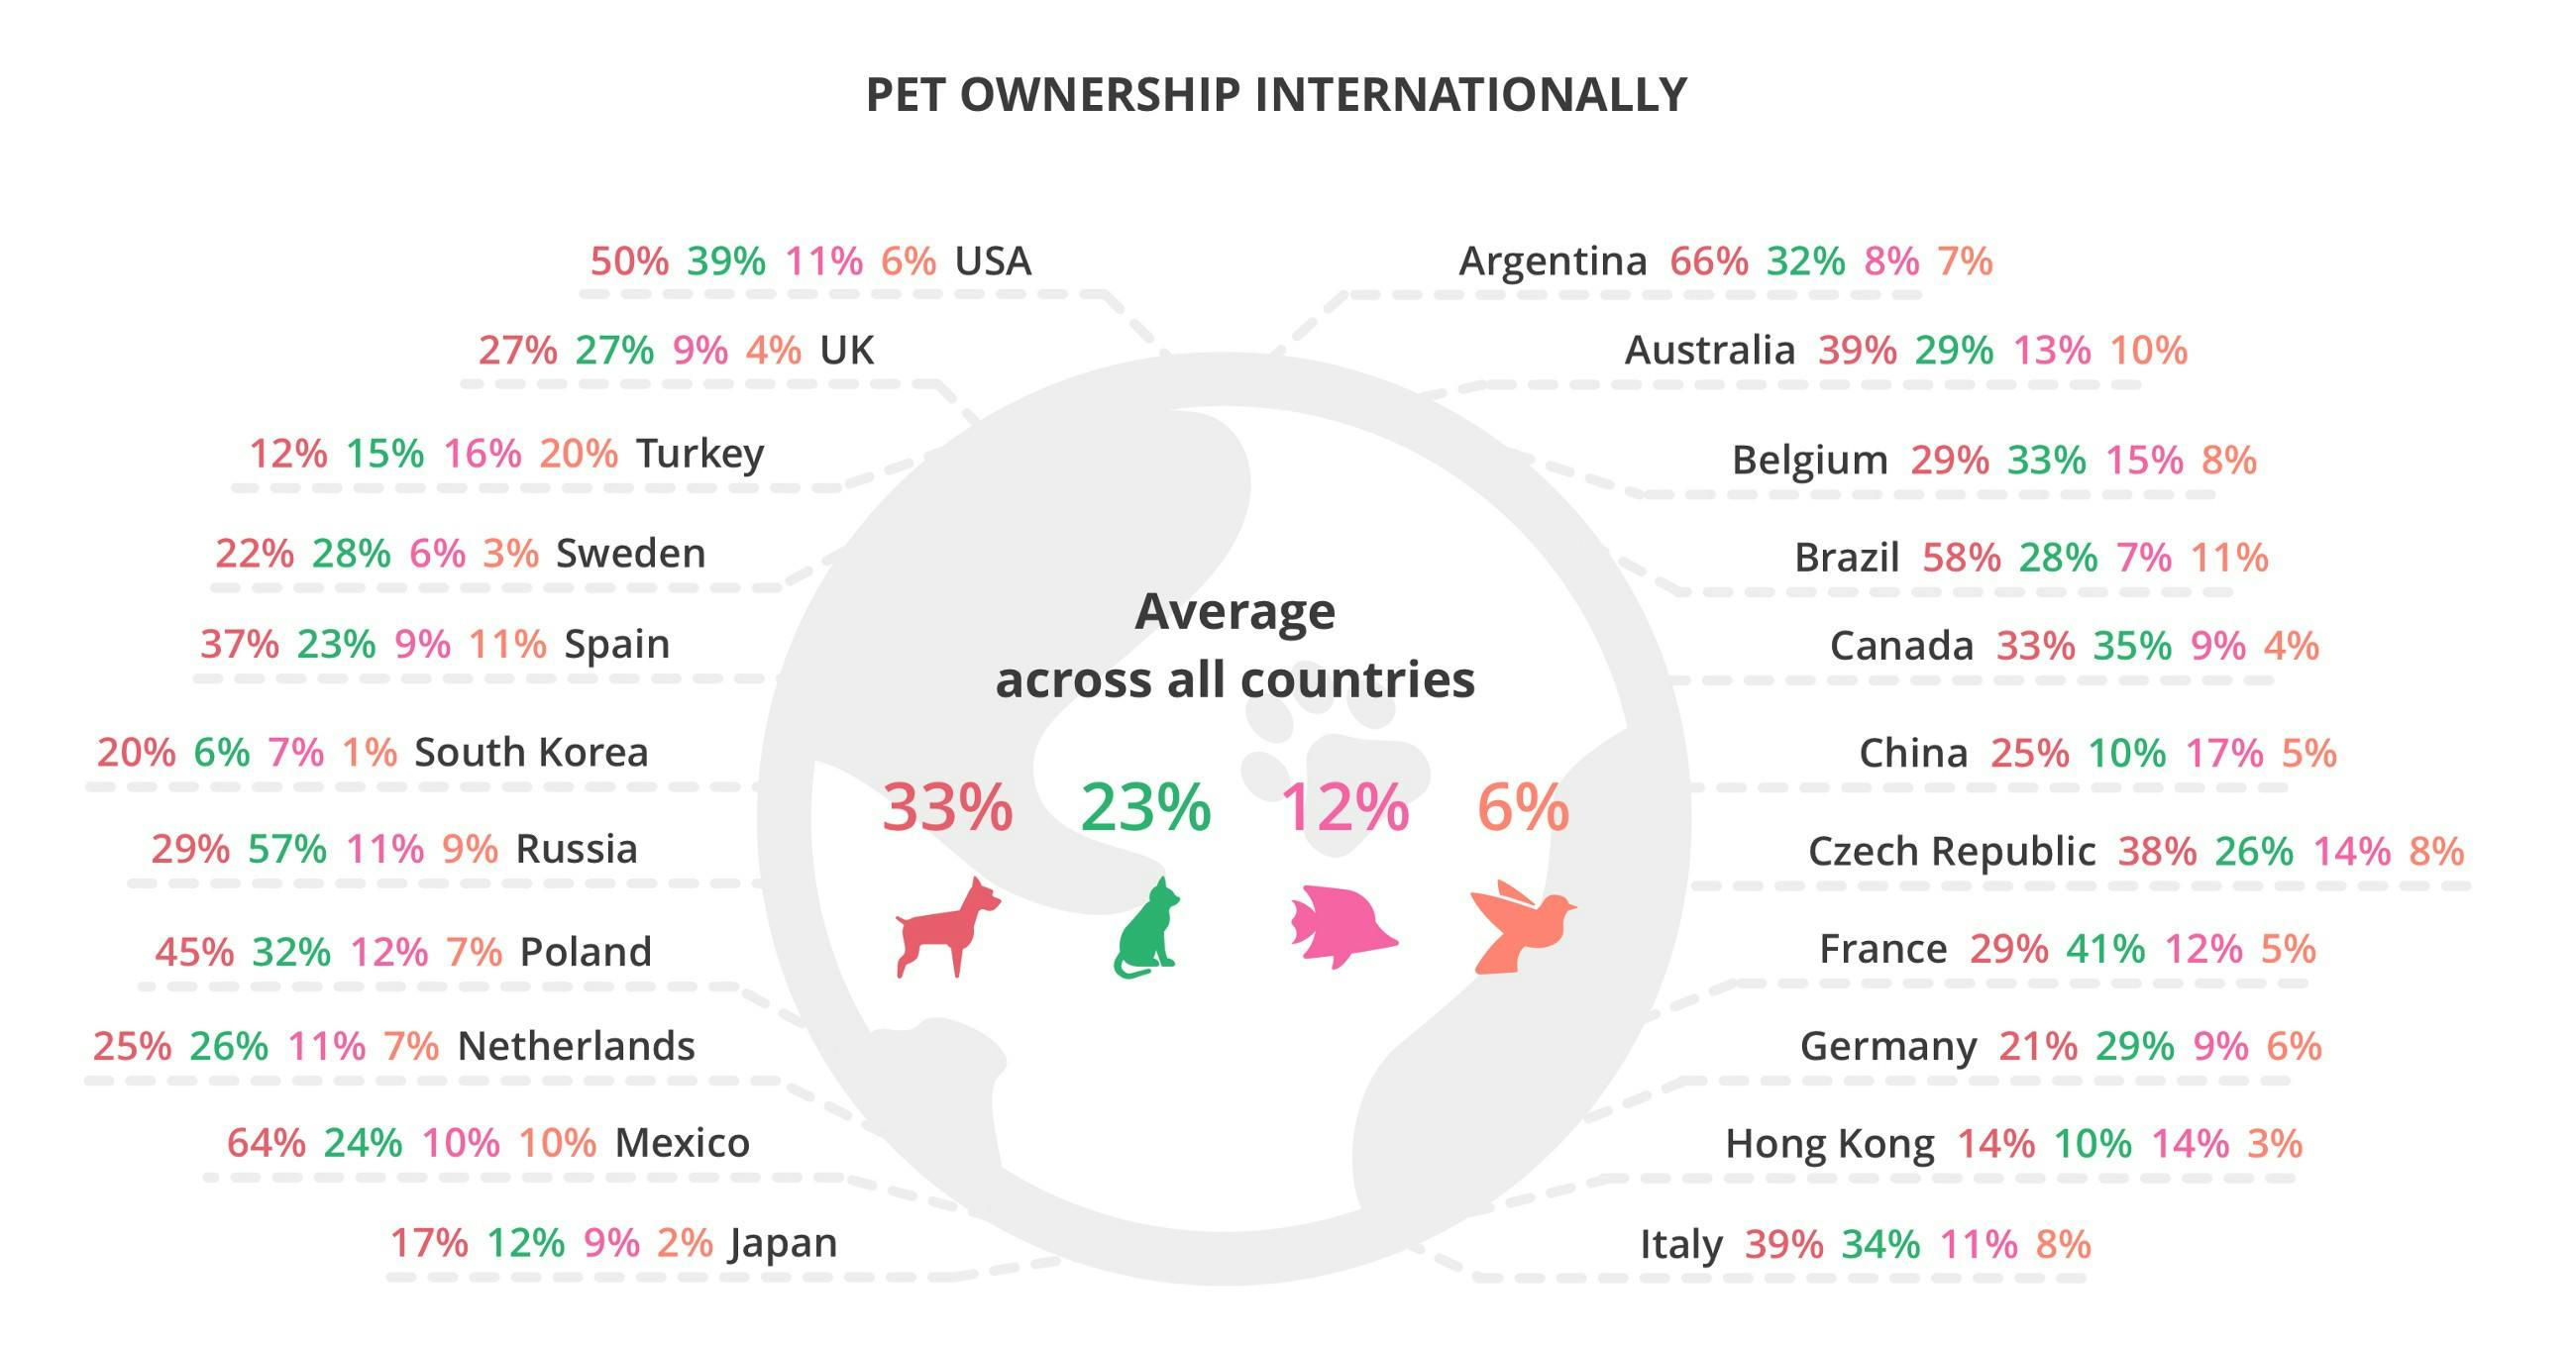 Pet ownership internationally